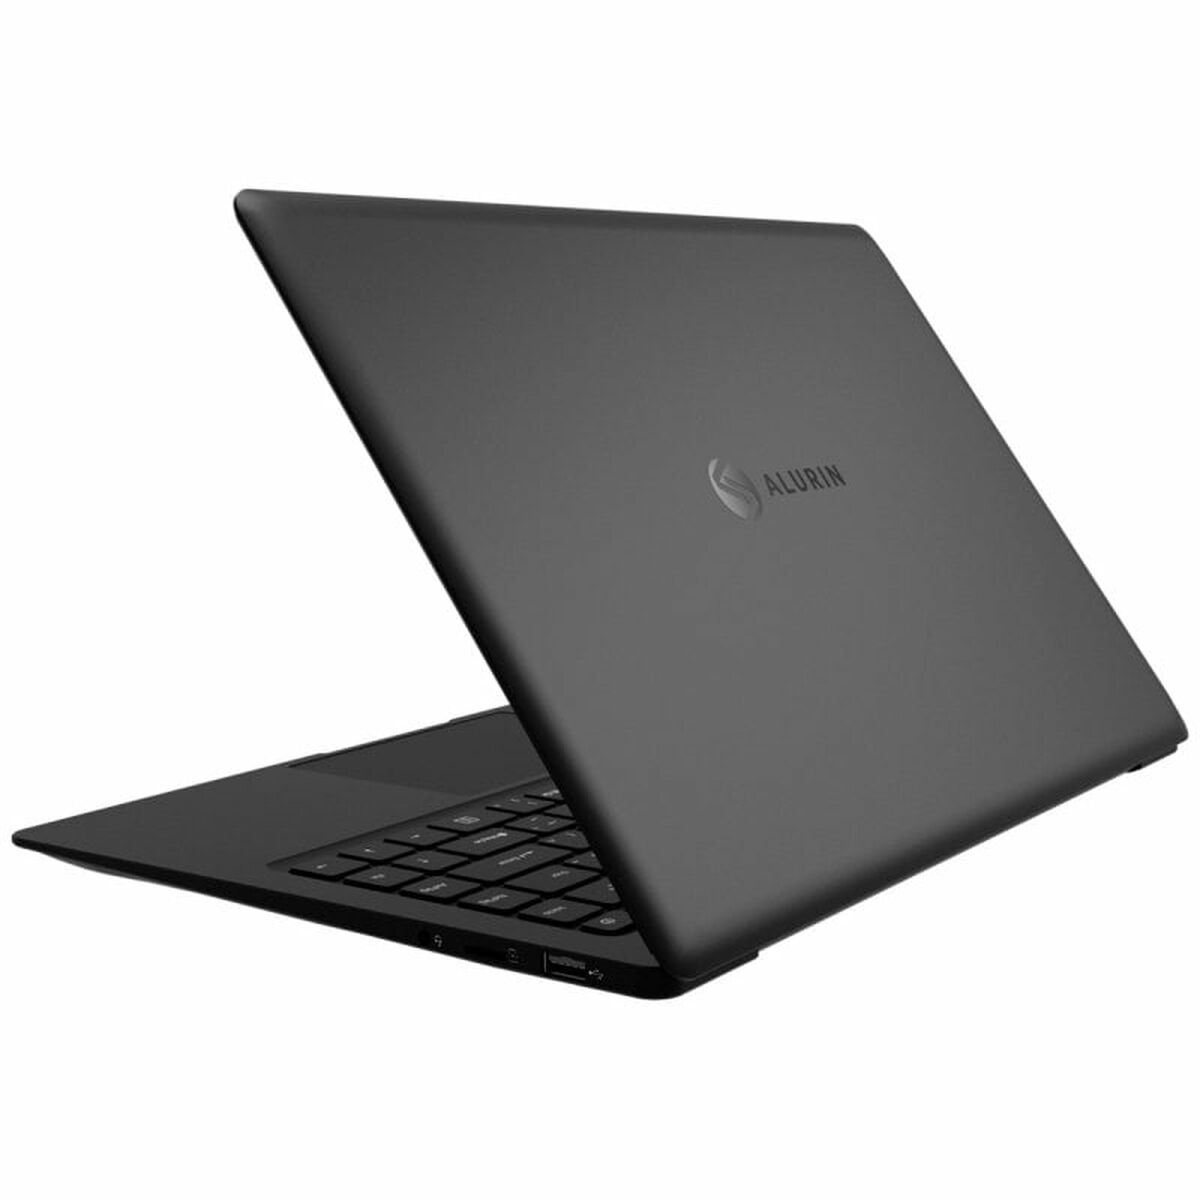 Laptop Alurin Go Start 14" Intel Celeron N4020 8 GB RAM 256 GB SSD Qwerty Spanisch - CA International 